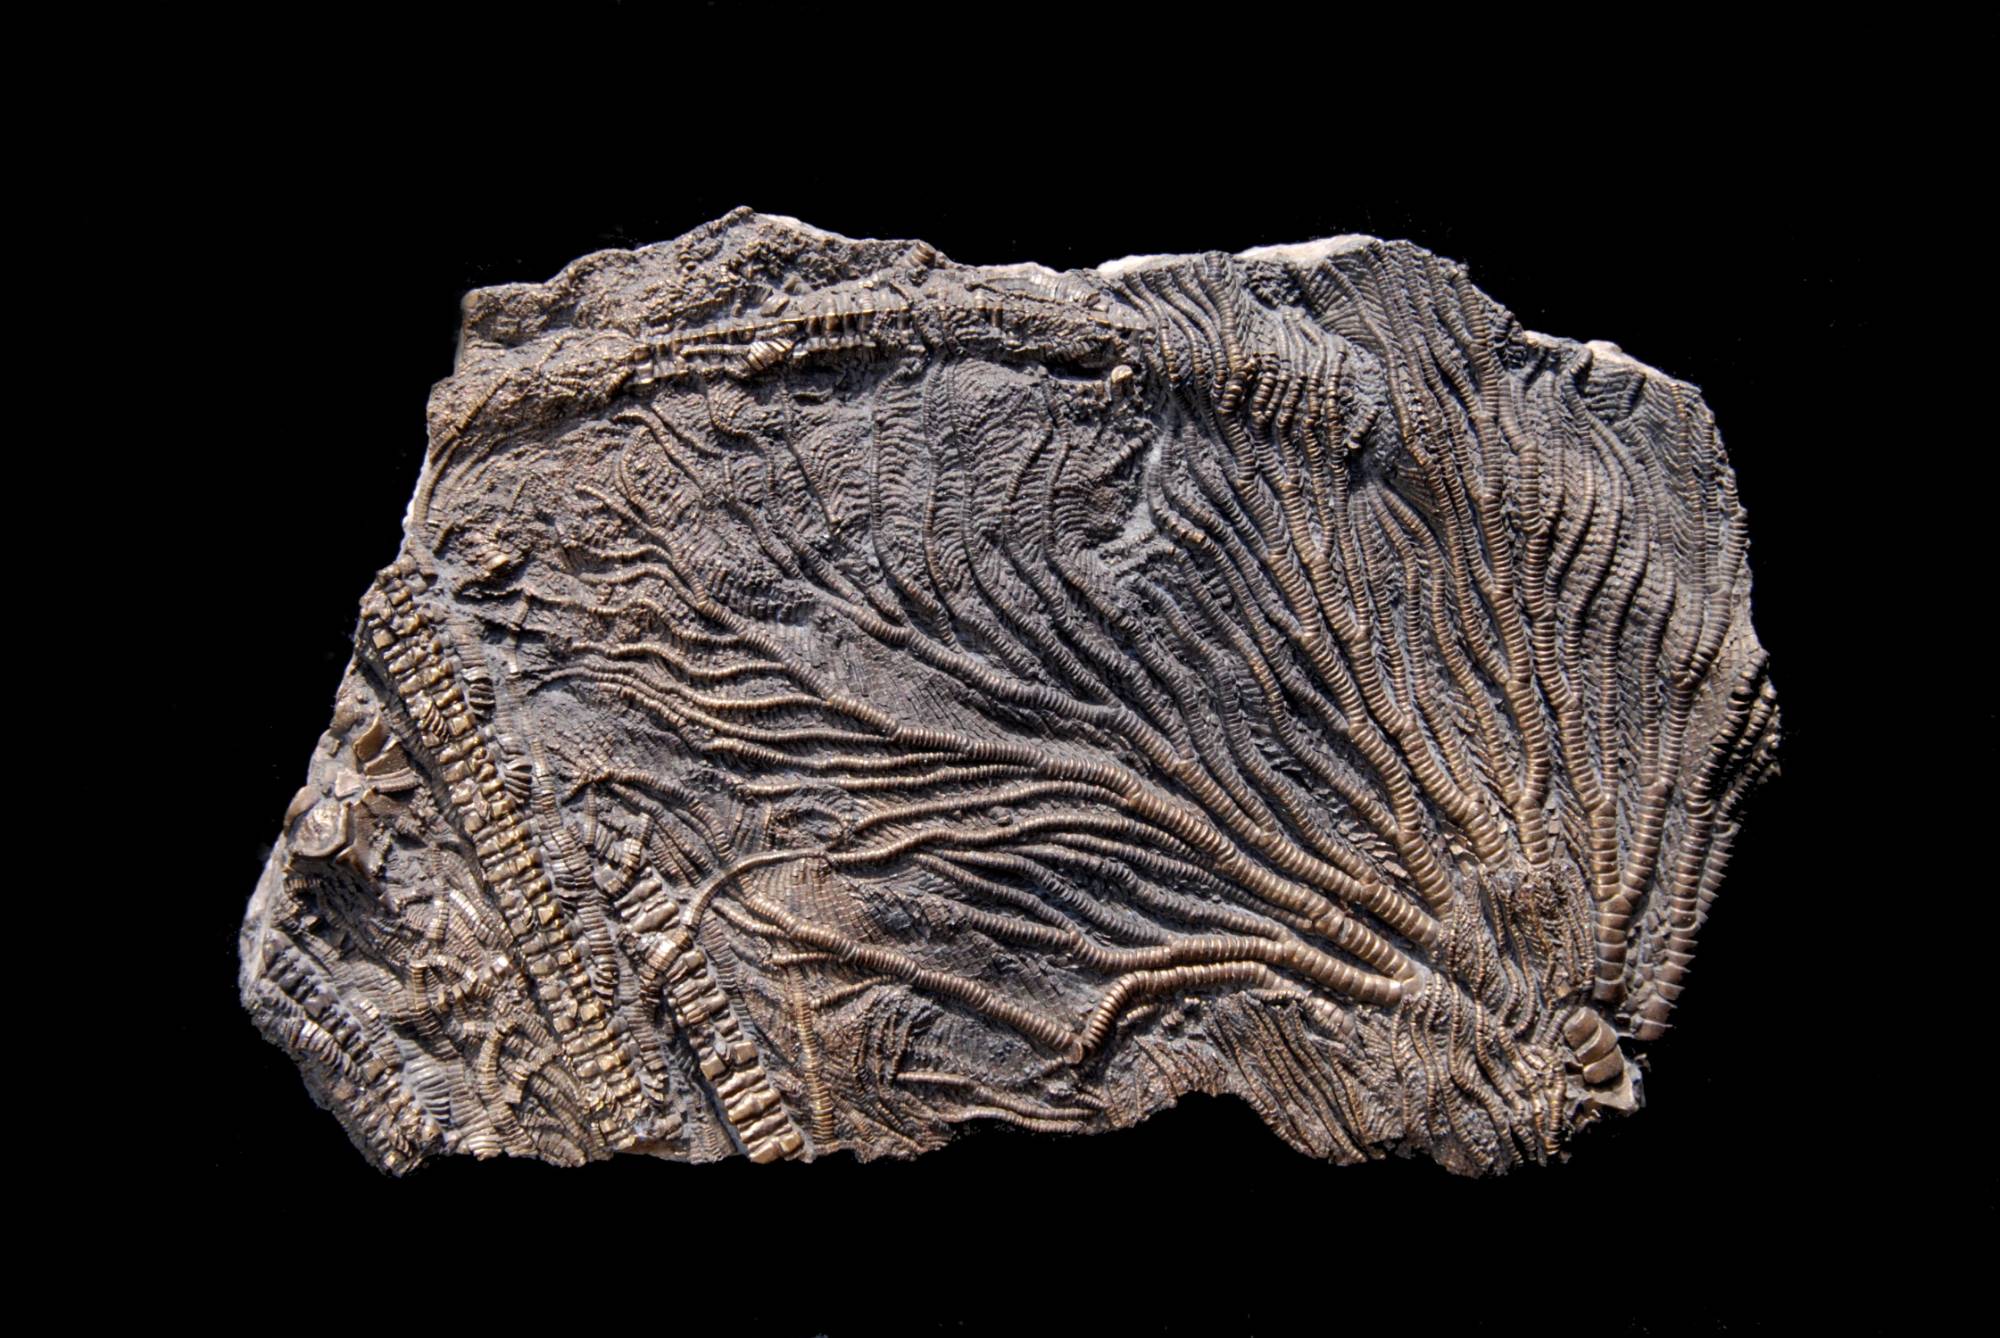 Pentacrinites fossilis; 14x9 cm; Black Ven Marls; Charmouth, Dorset, UK